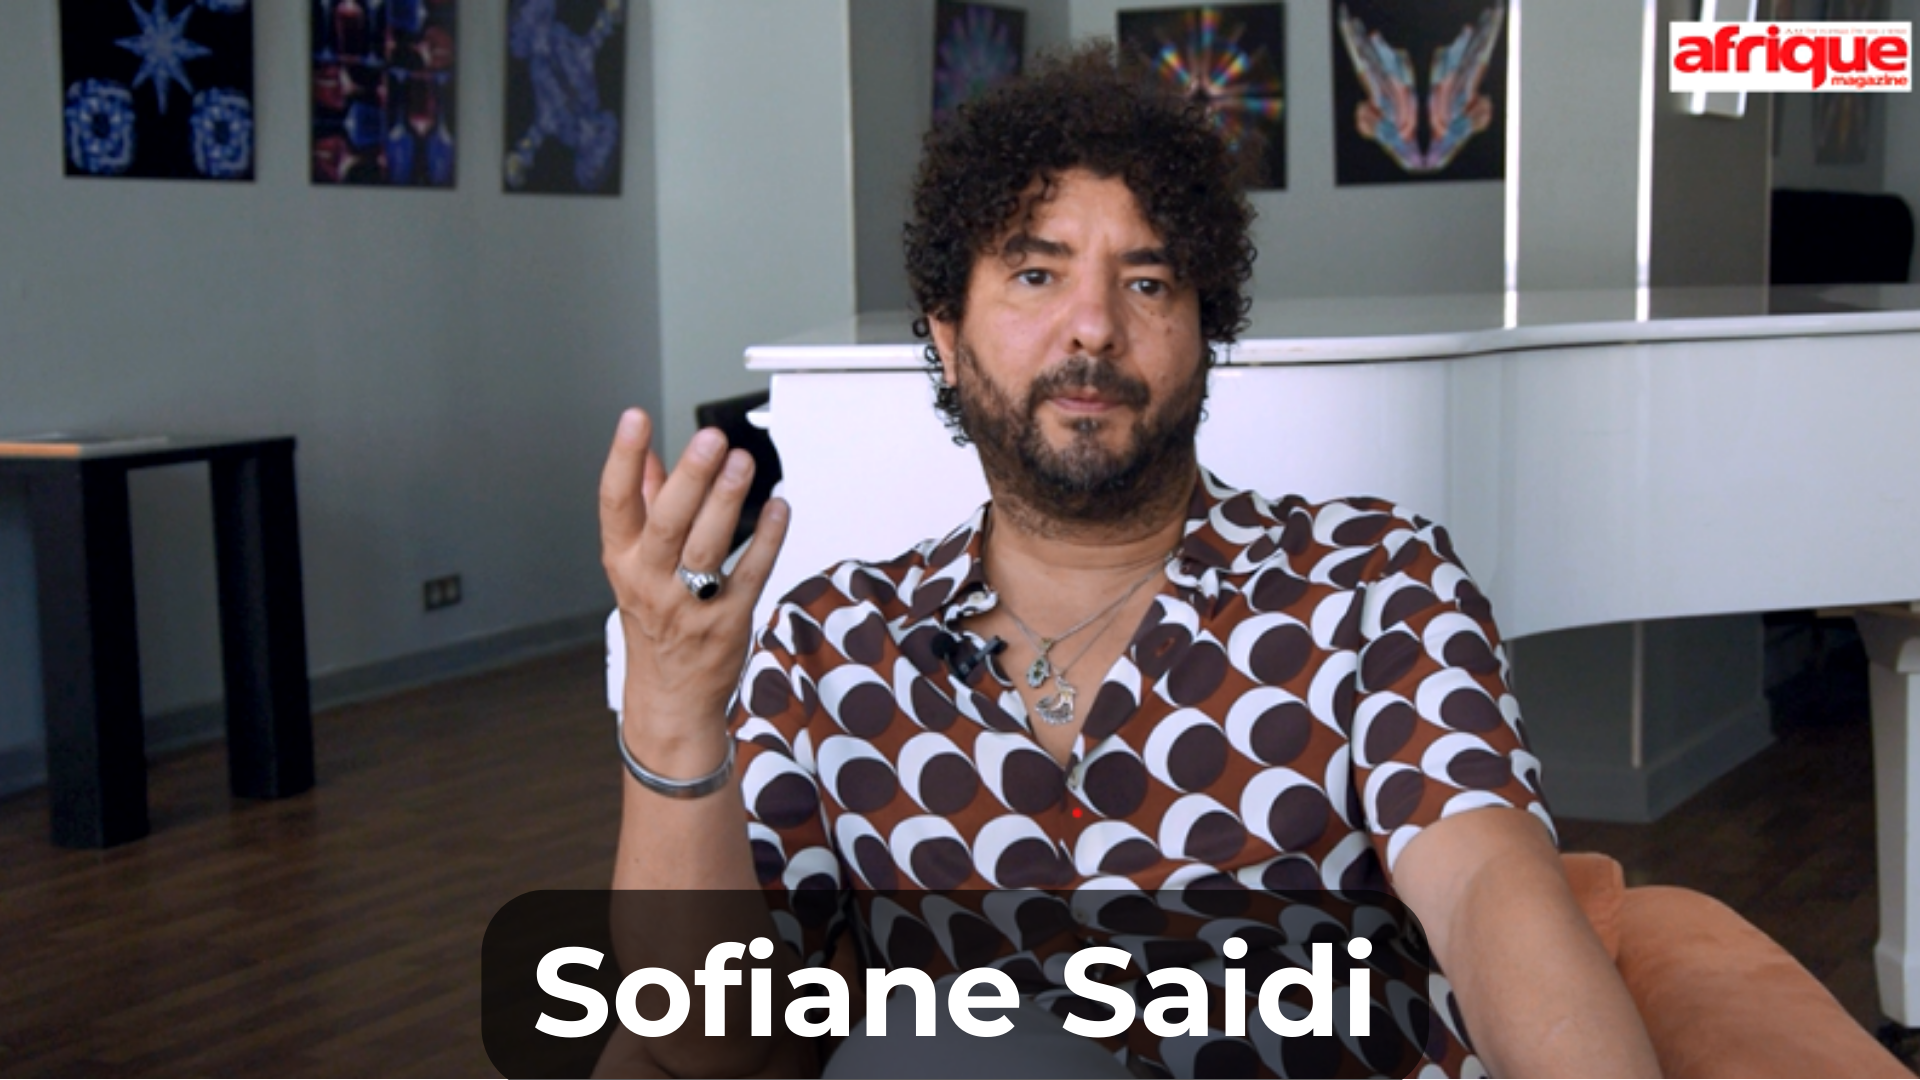 Sofiane Saidi